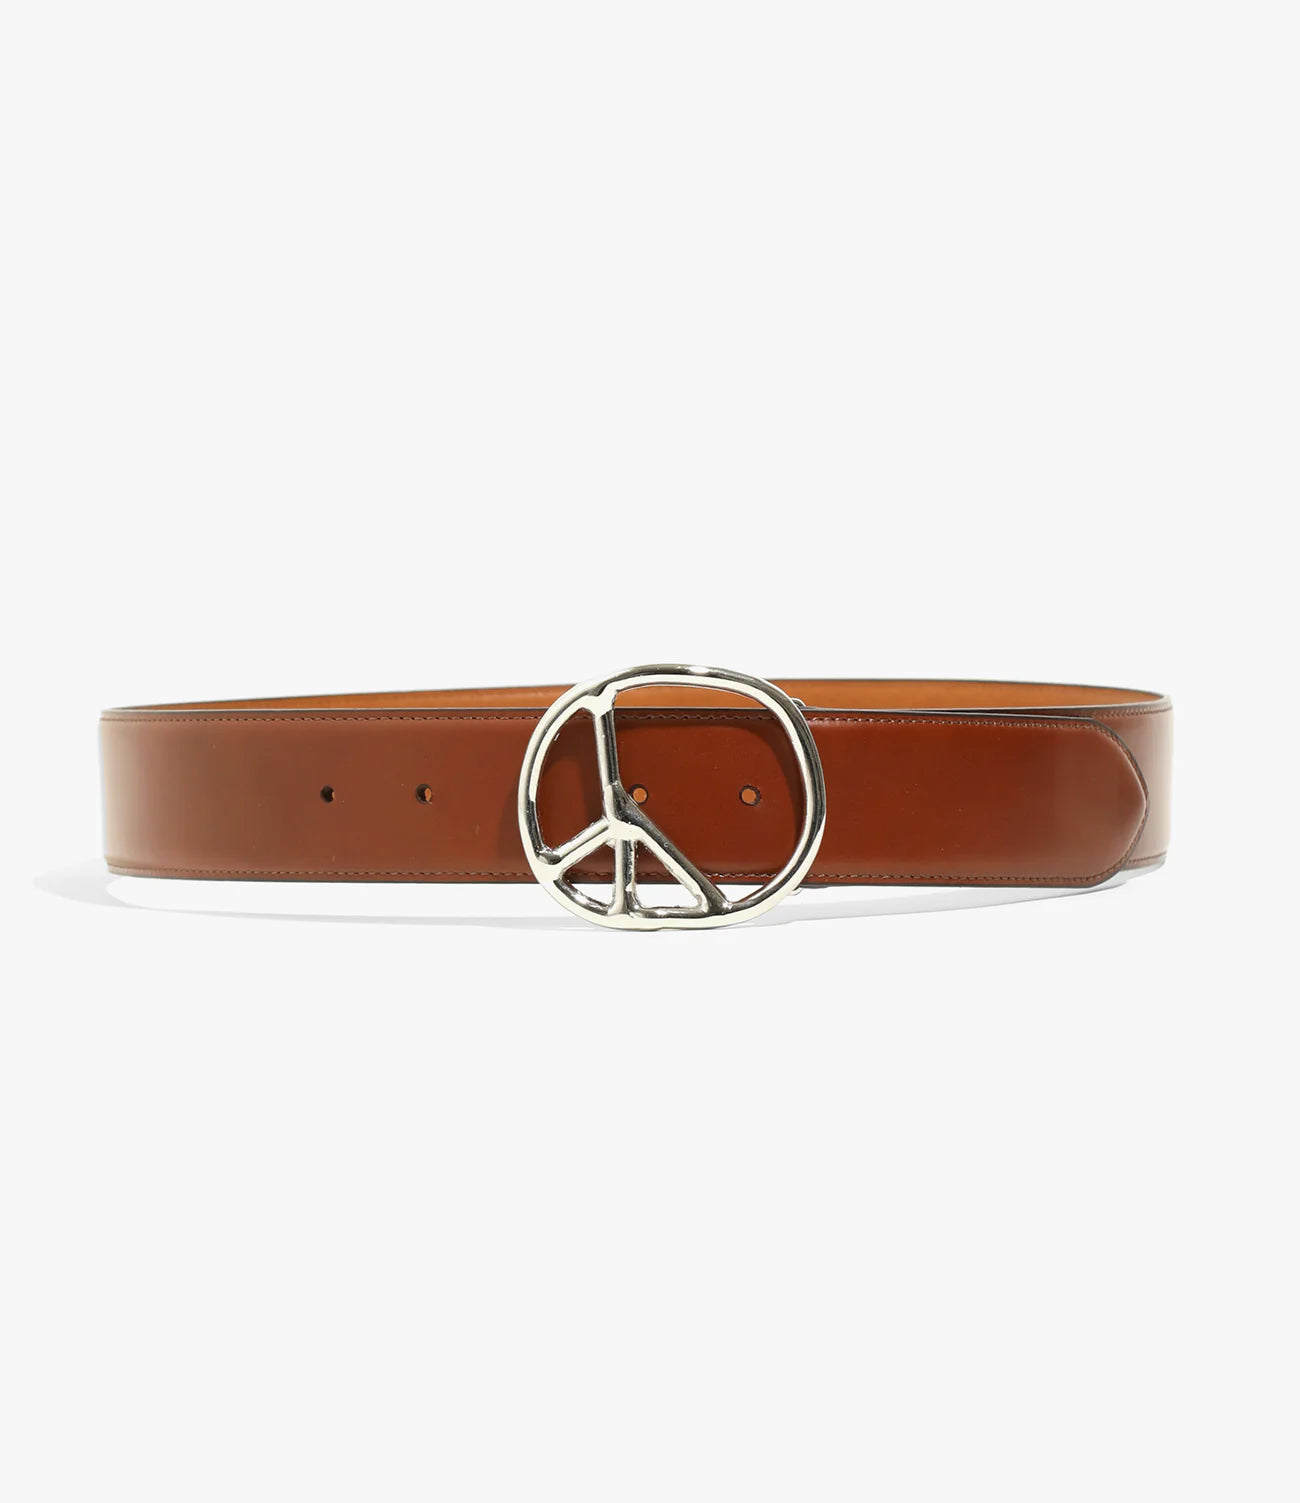 Needles Peace Buckle Belt - Steer Leather